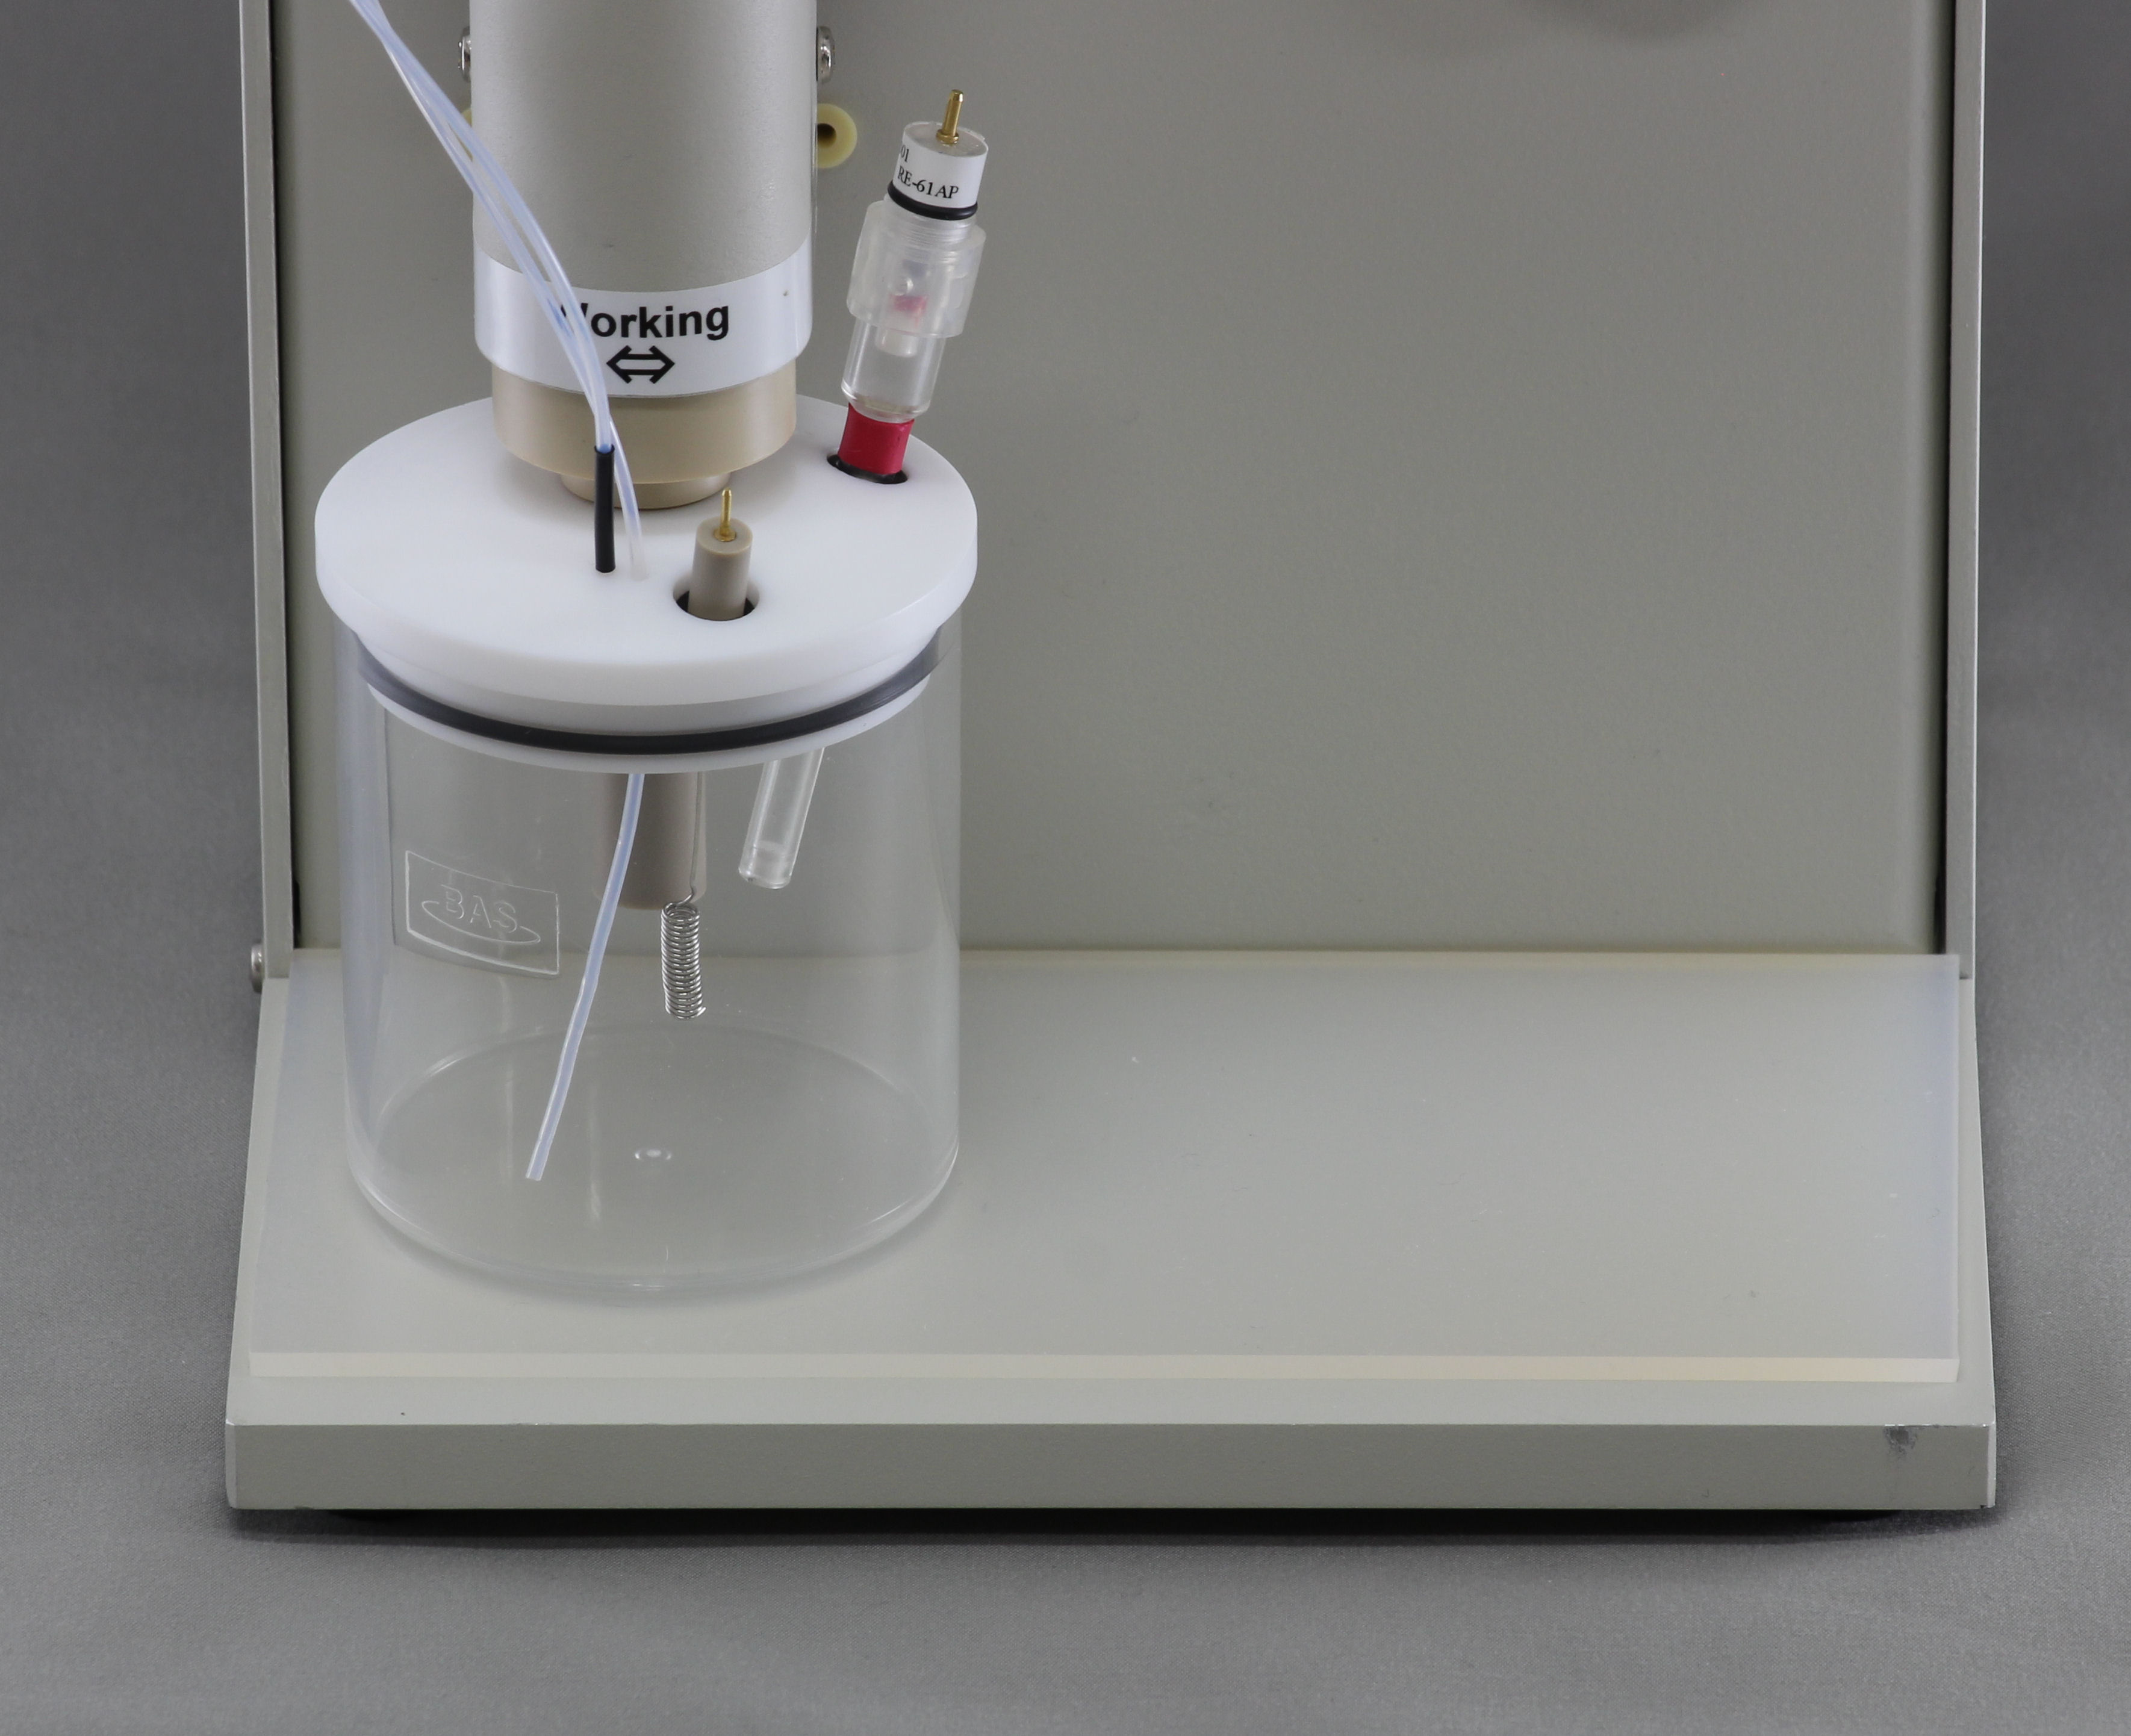 For RRDE measurement using 200 mL Sample vial for alkaline solution